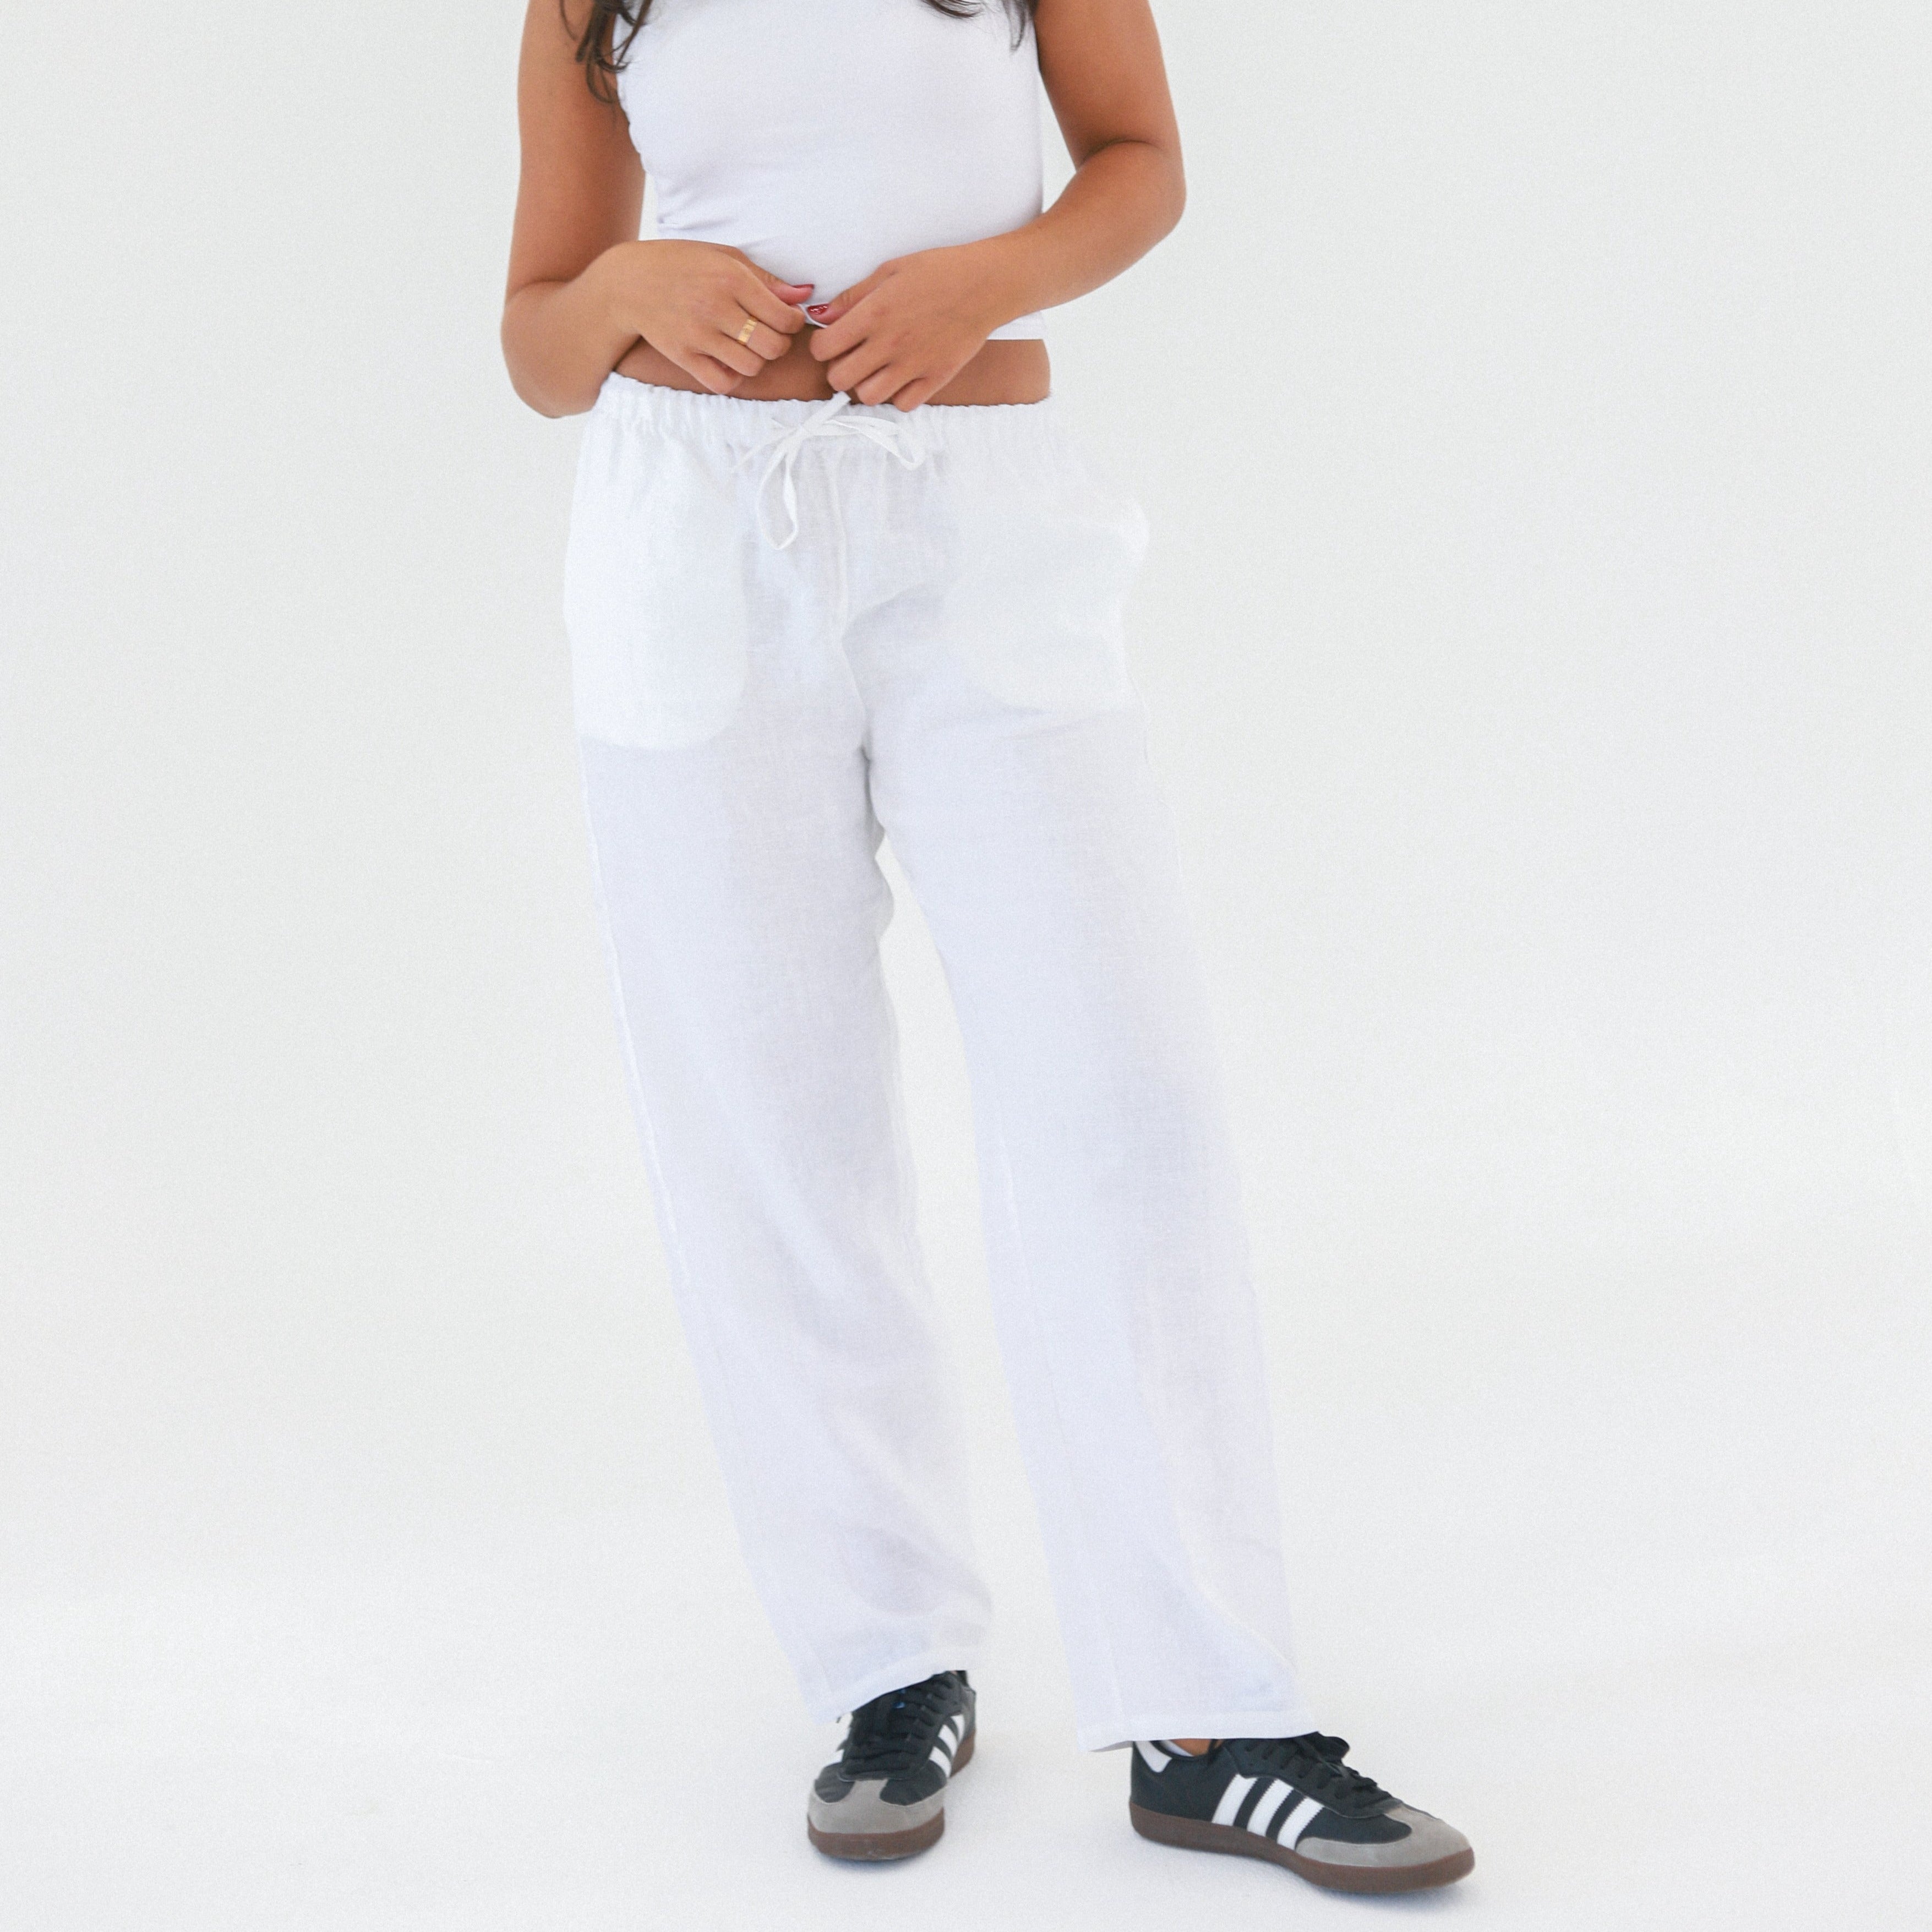 Women's Linen Pants, White Linen Pants